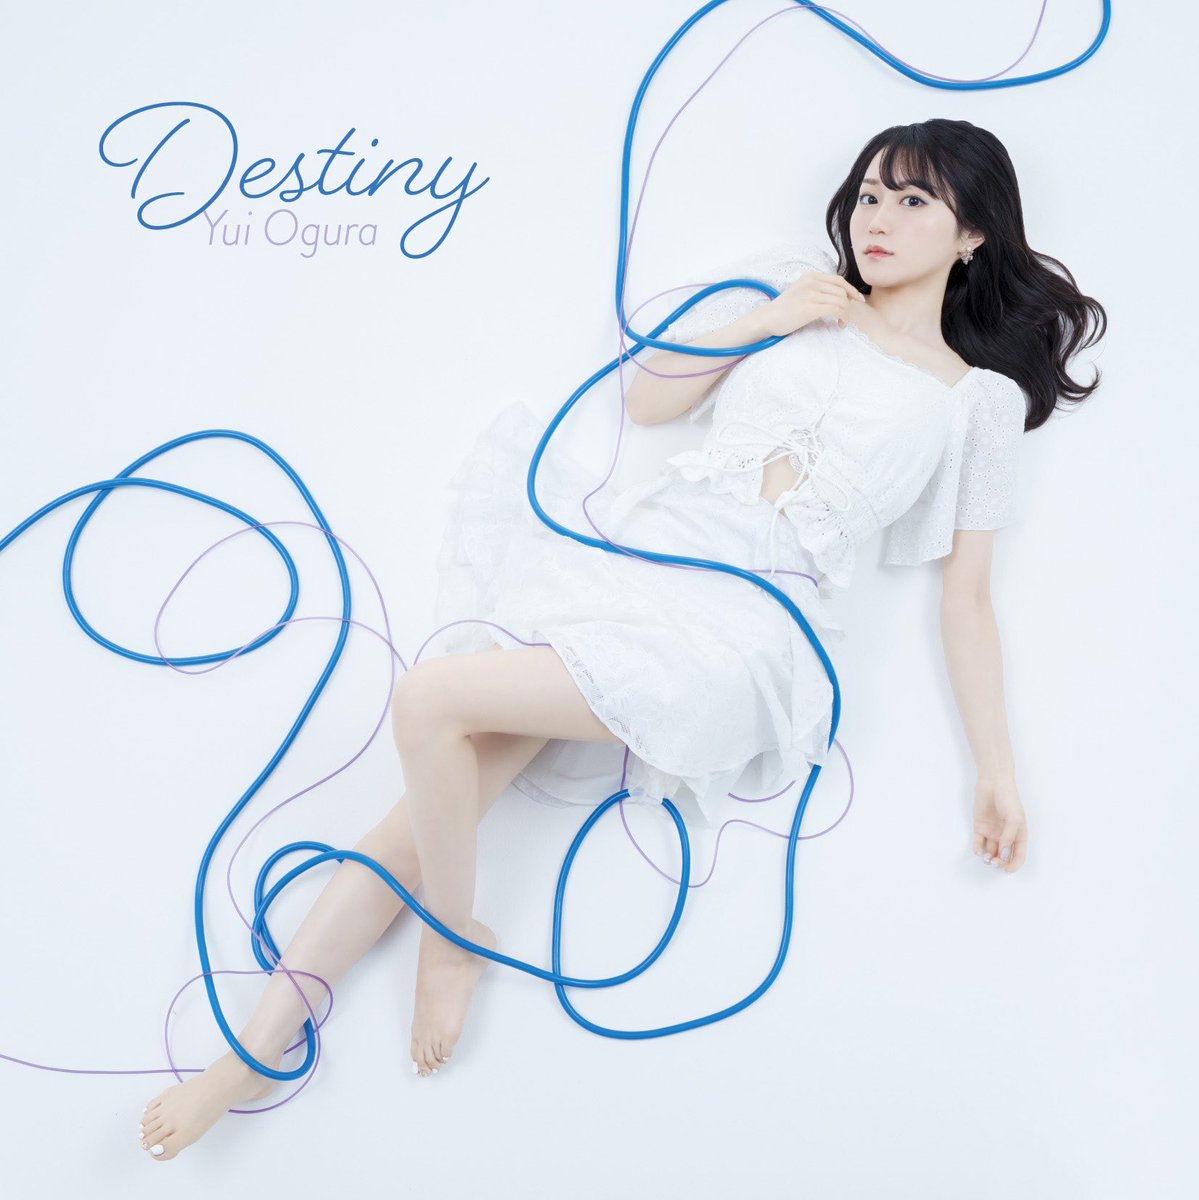 Cover for『Yui Ogura - Destiny』from the release『Destiny』